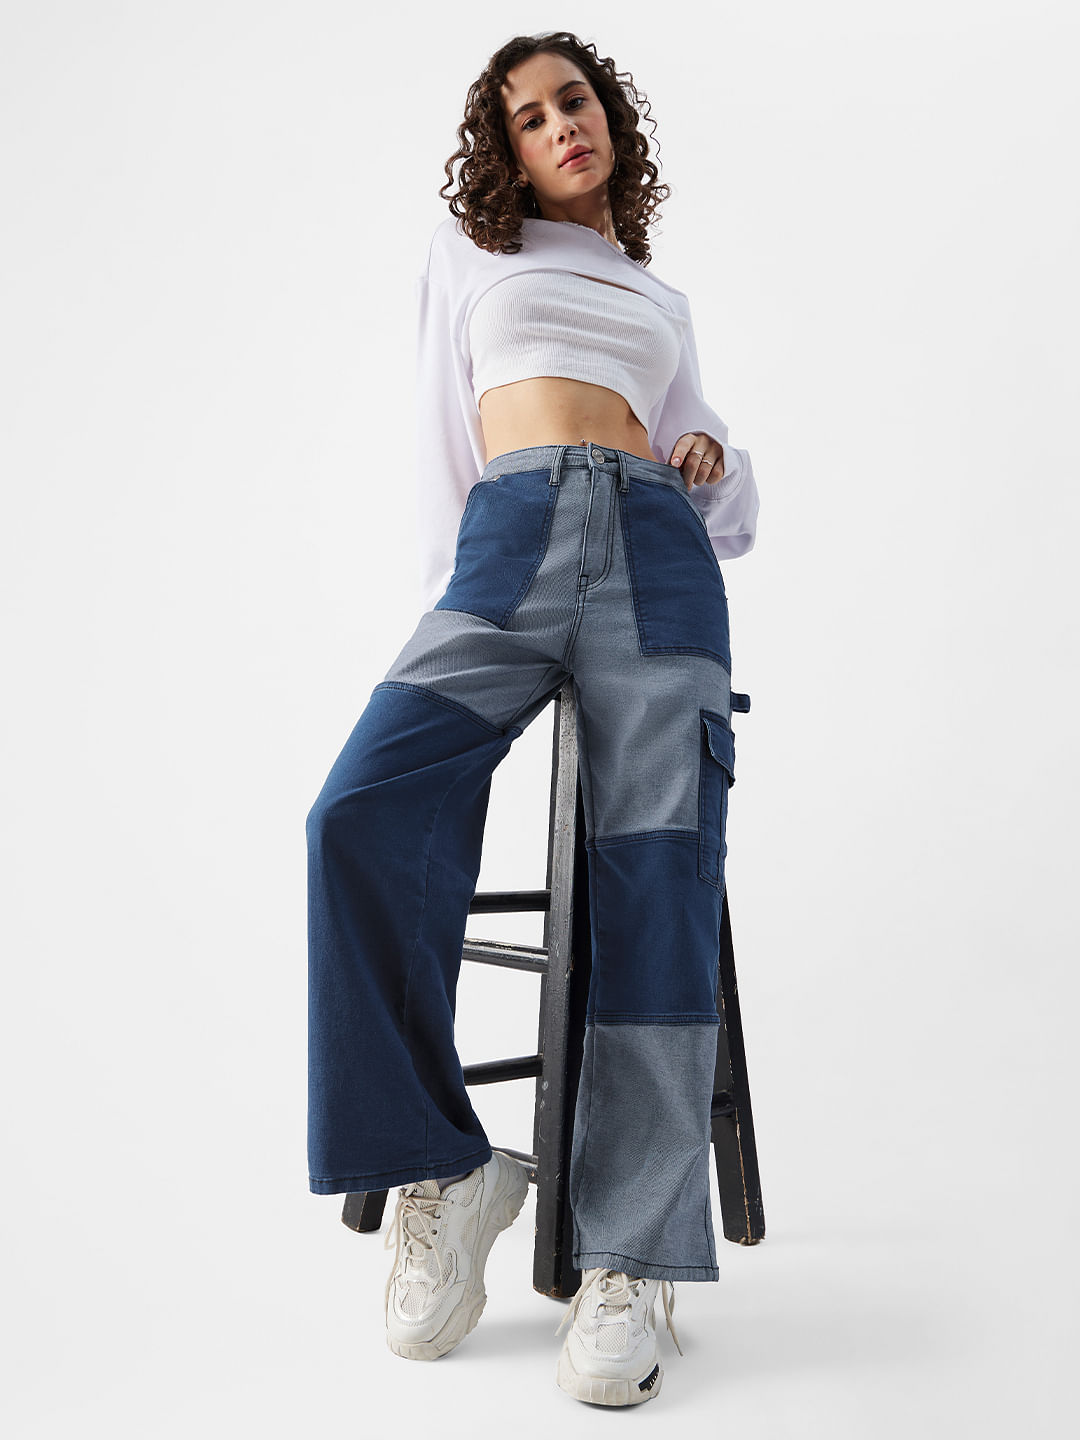 Buy Solids: Cool Blues (Colourblock) Women Jeans Online